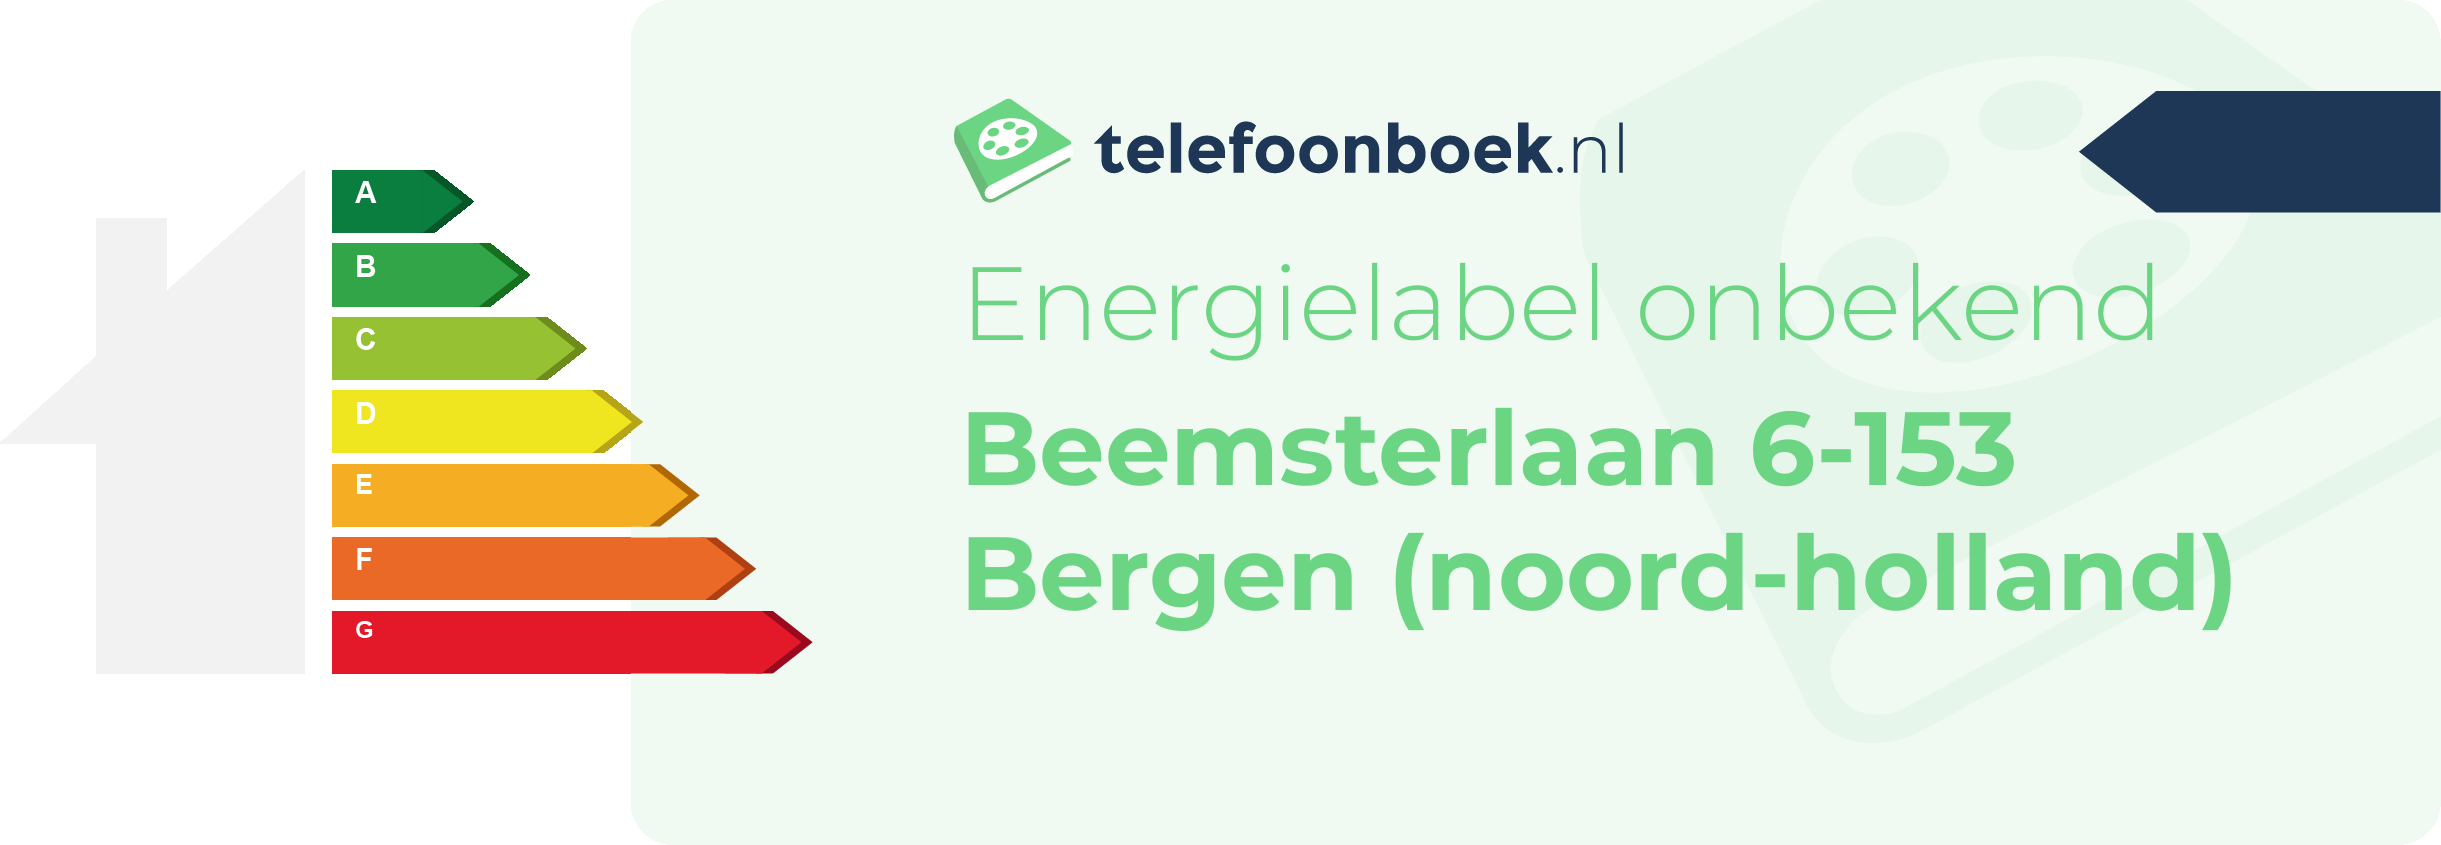 Energielabel Beemsterlaan 6-153 Bergen (Noord-Holland)